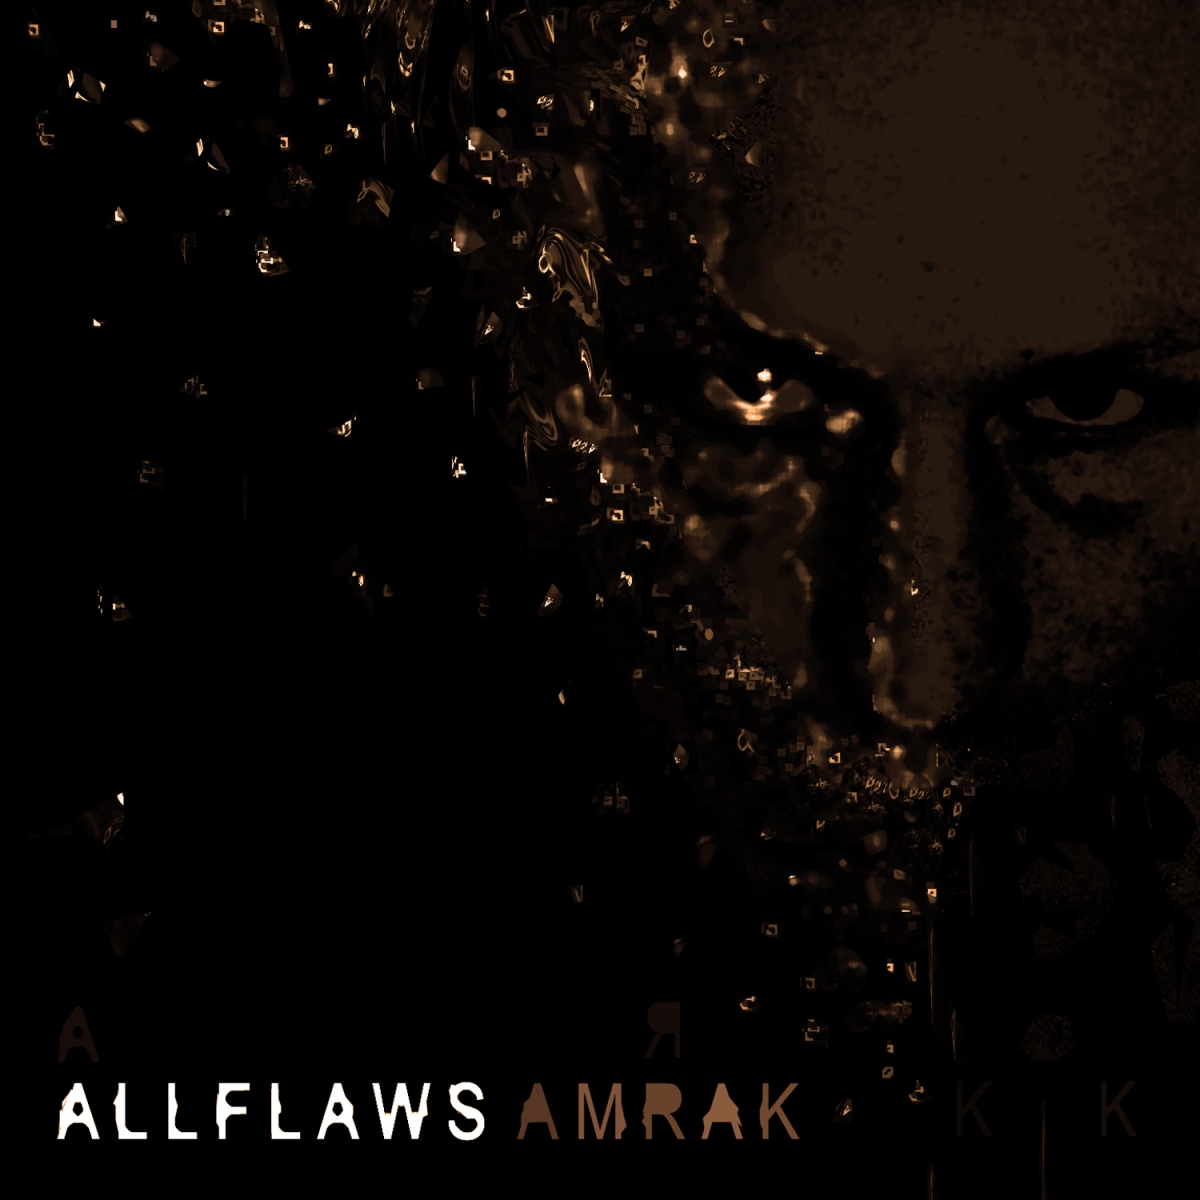 Allflaws – Amrak (Lyrics) Written By Gabriel Curran